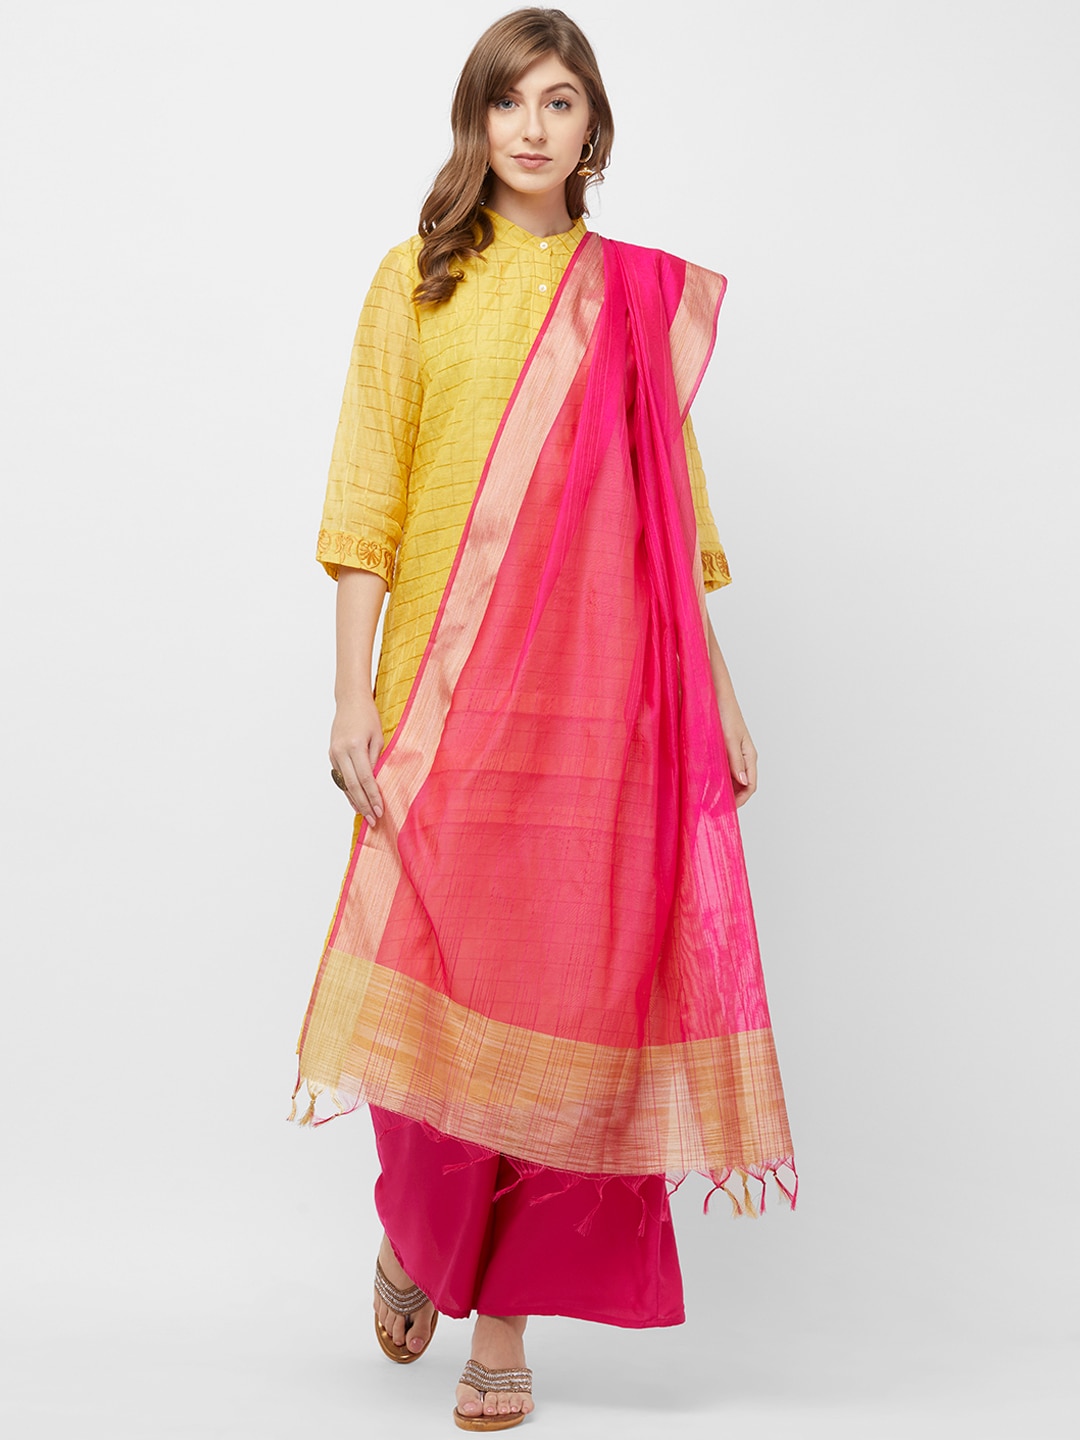 Dupatta Bazaar Fuchsia Pink & Gold-Toned Solid Dupatta Price in India